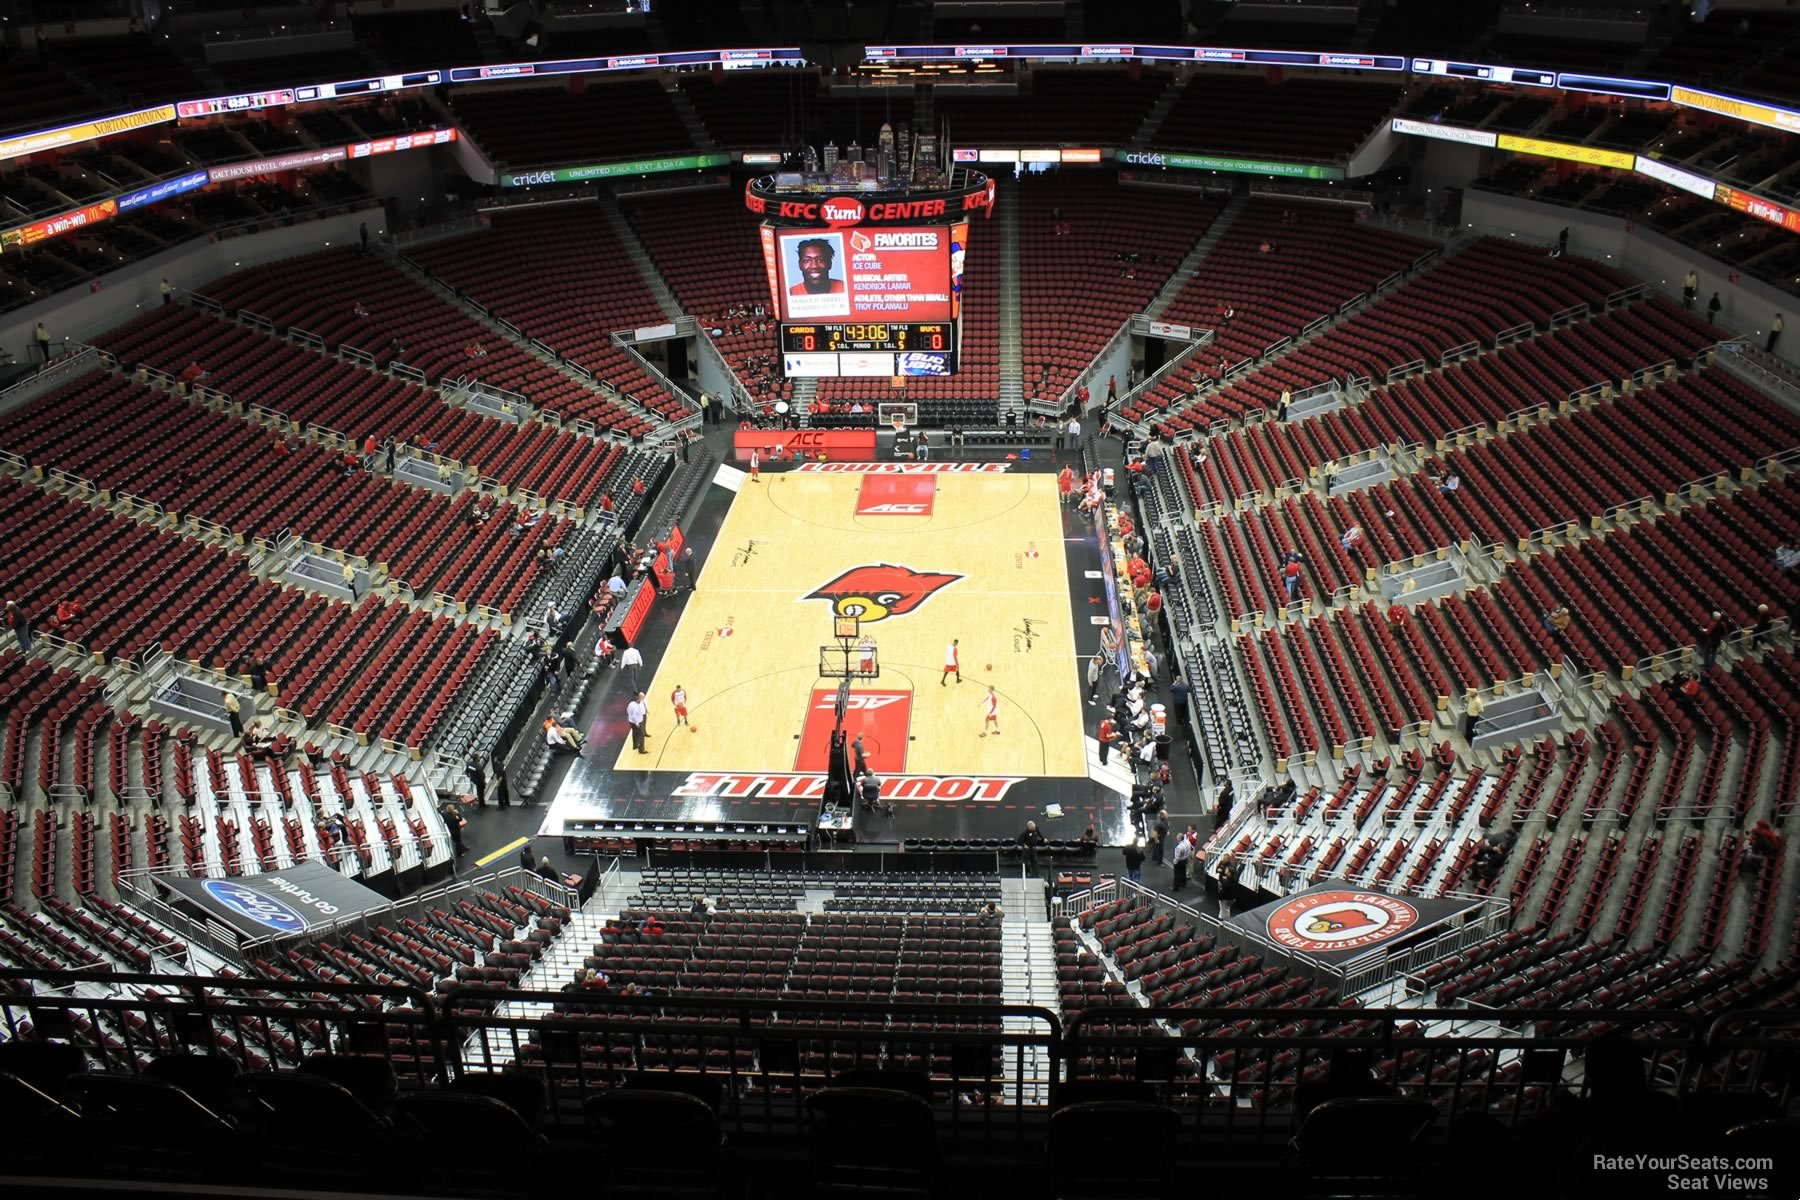 Yum Center Seating Chart Louisville Basketball